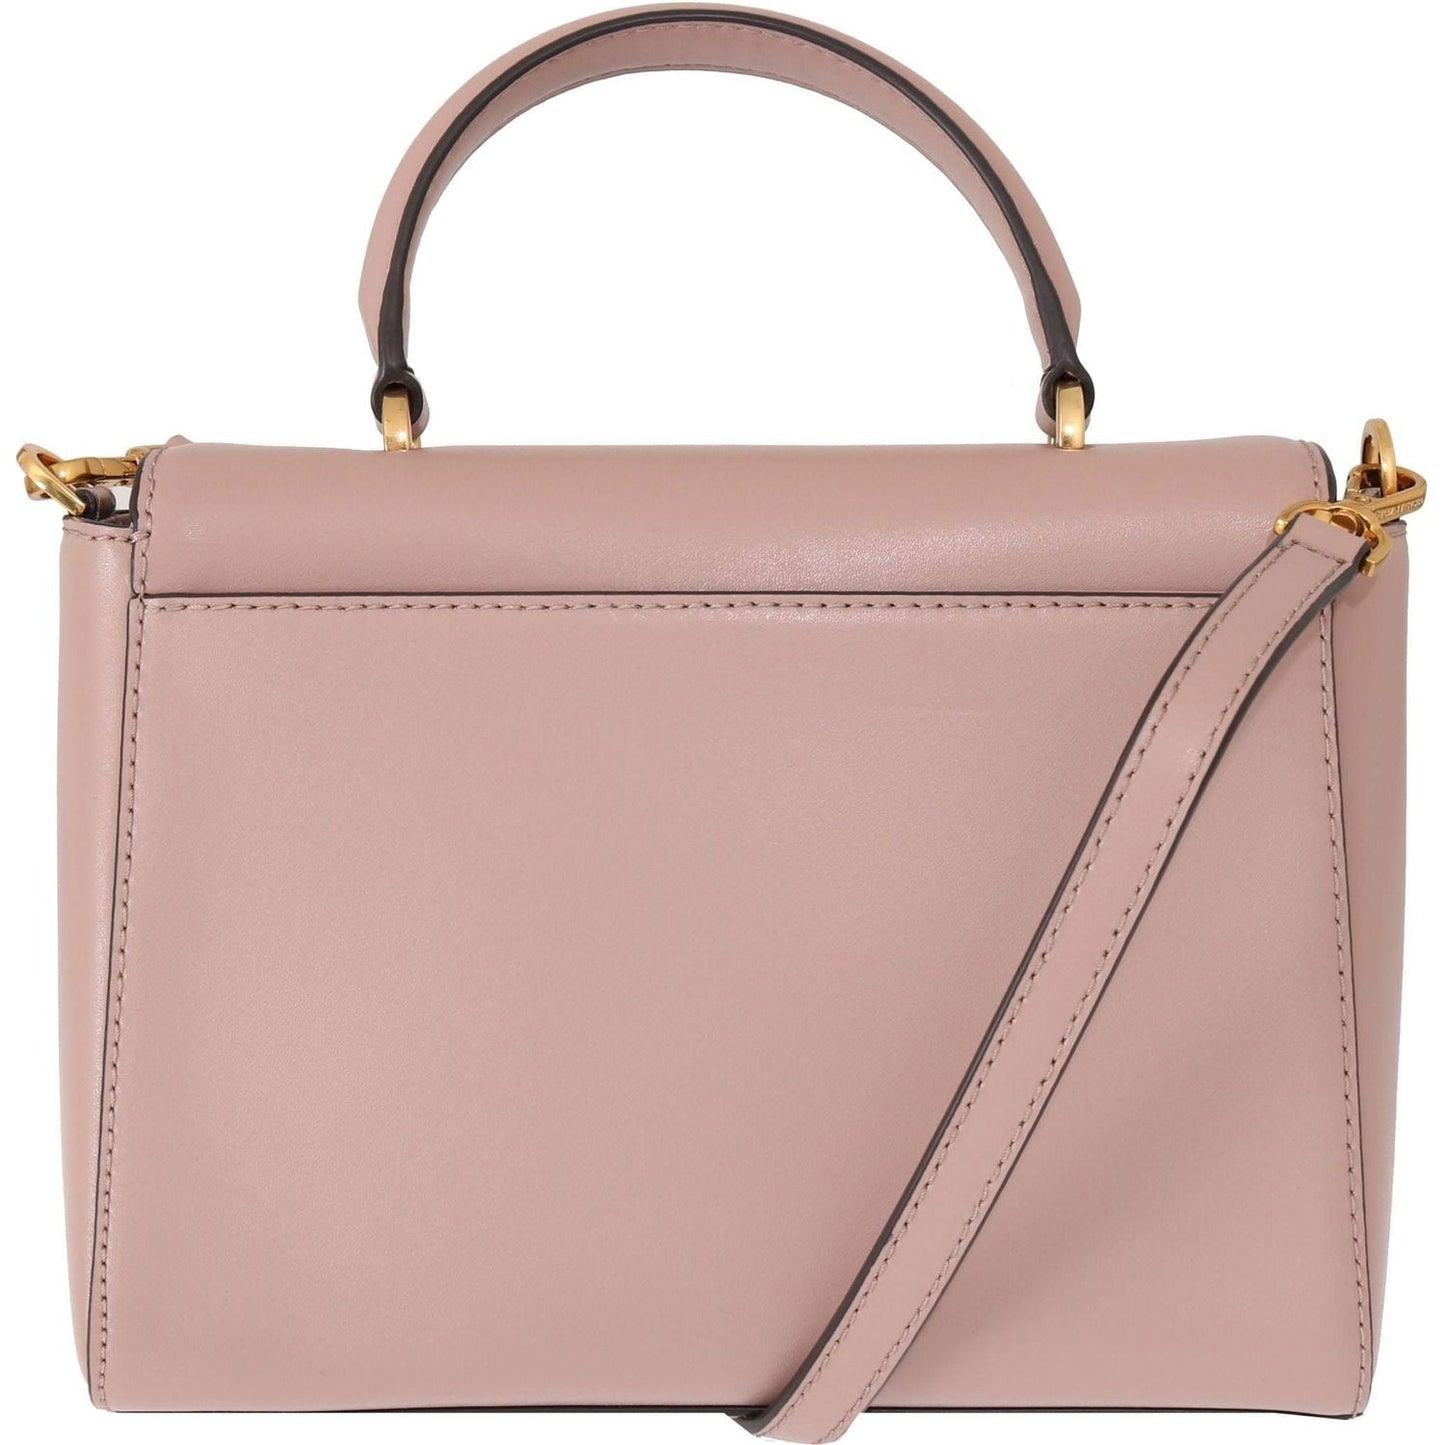 Michael Kors Elegant Pink Leather Mindy Shoulder Bag pink-mindy-leather-shoulder-bag WOMAN HANDBAG IMG_8914-scaled-919e386a-097.jpg